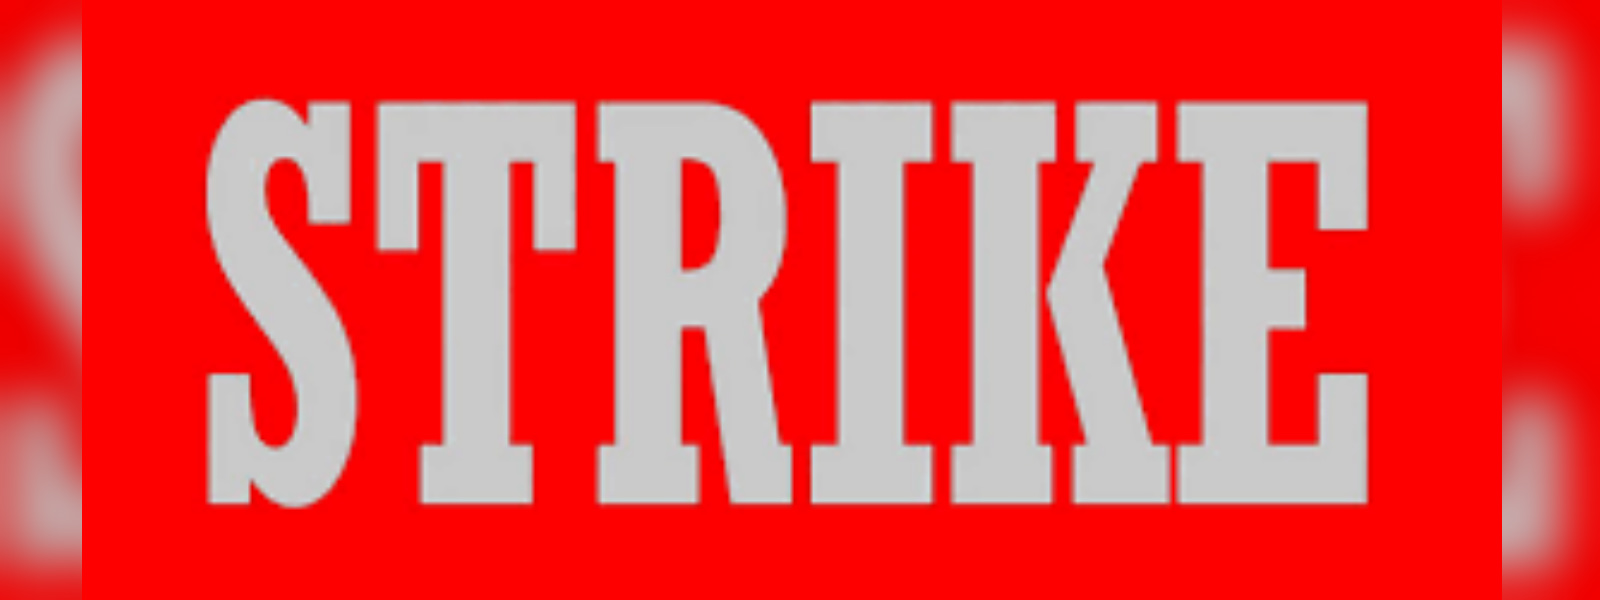 Teachers & Principals on Token Strike